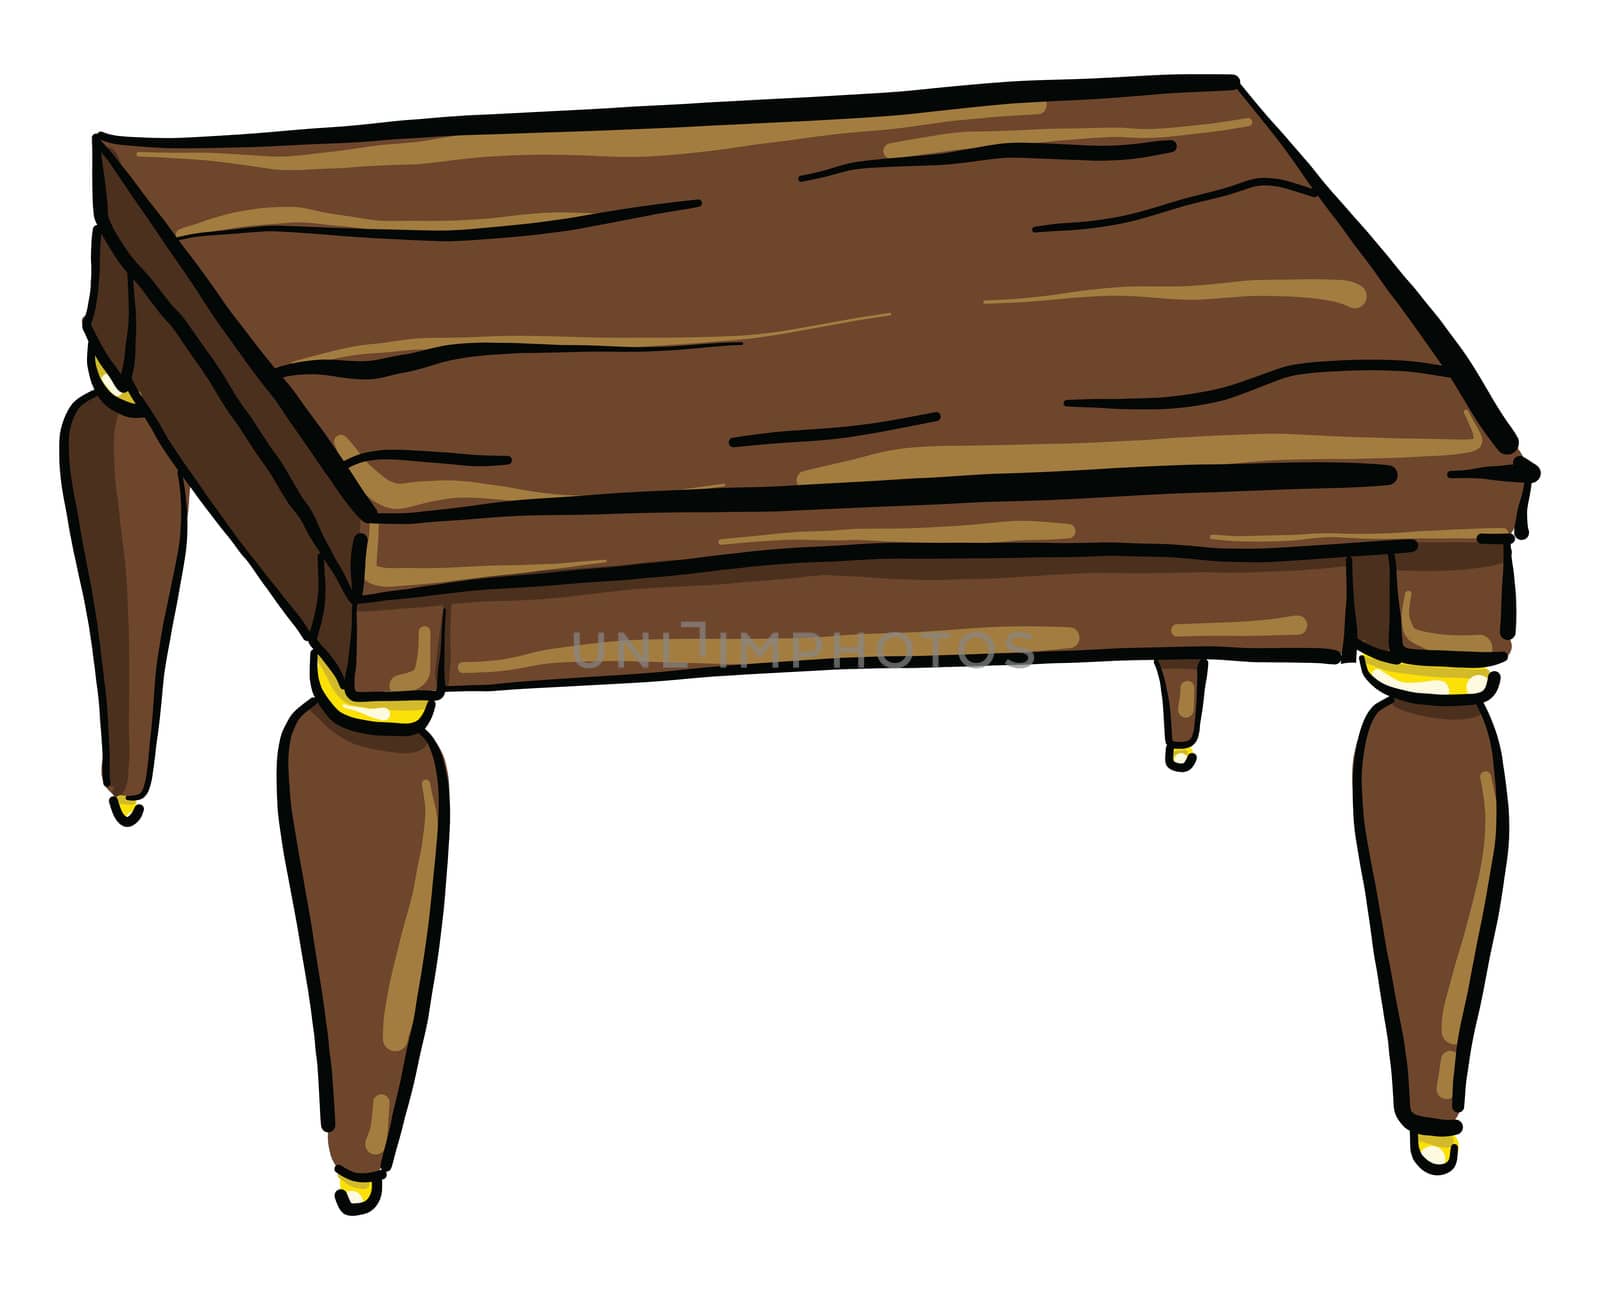 Wooden table , illustration, vector on white background by Morphart